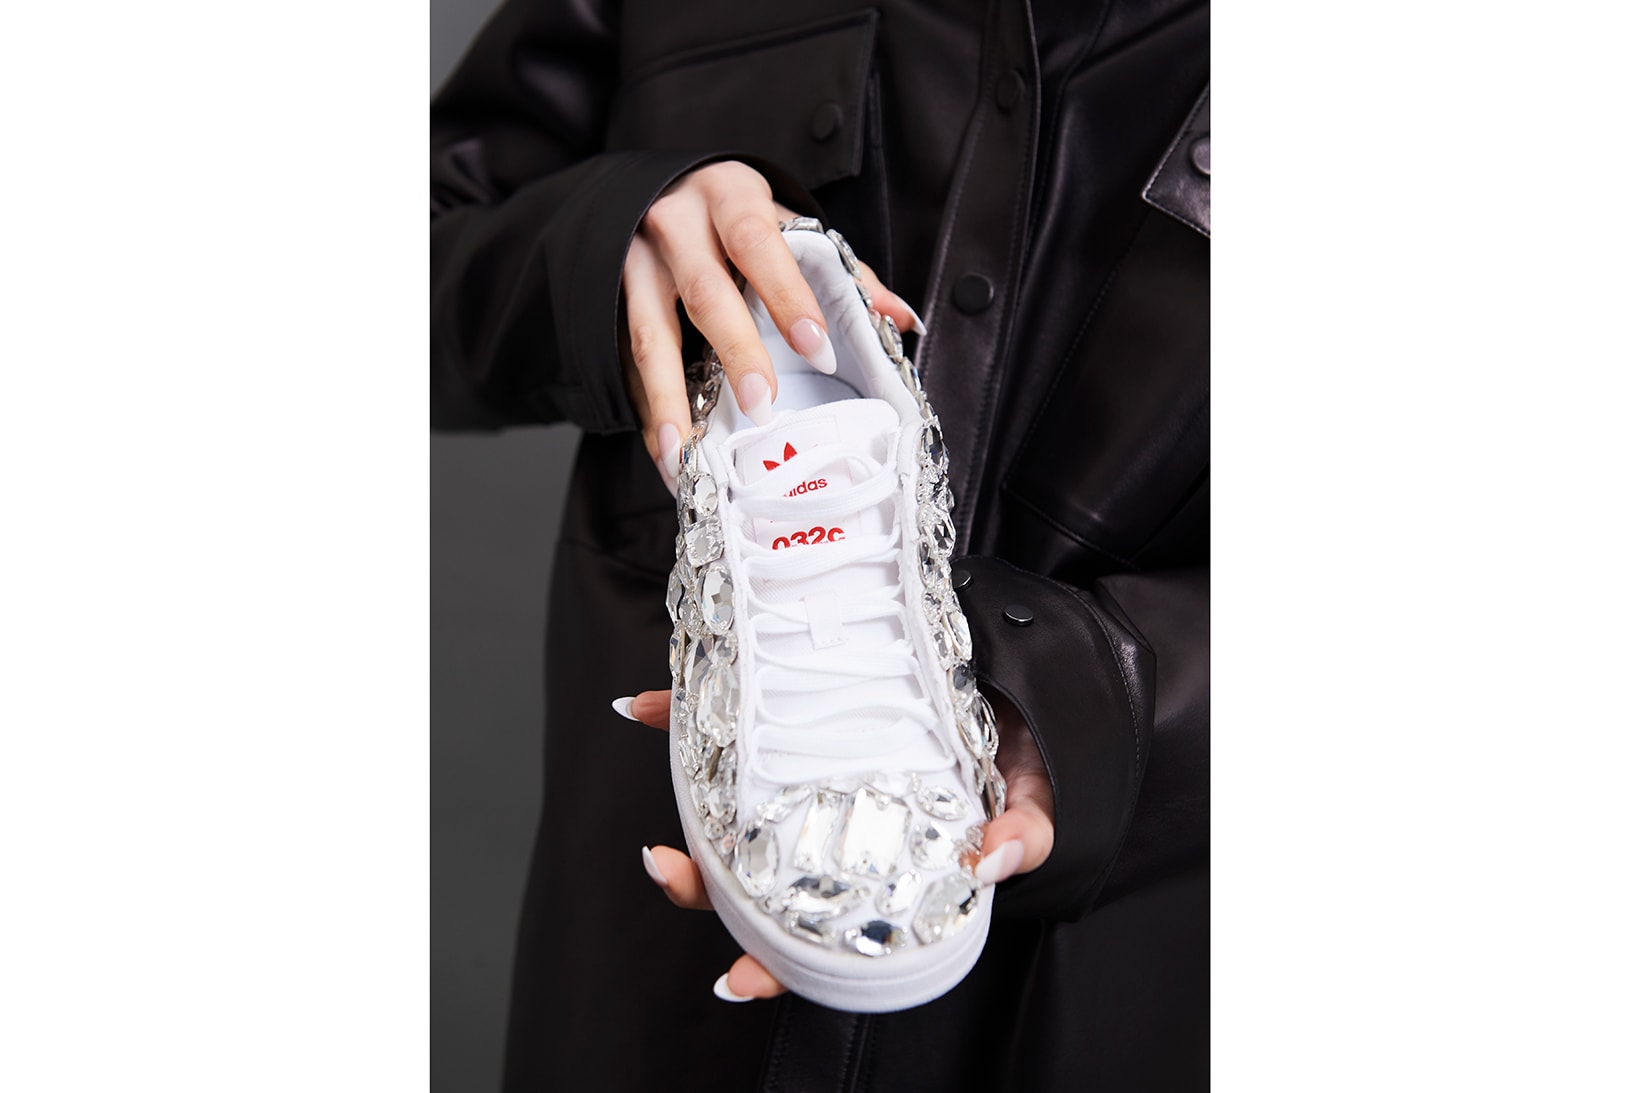 032c adidas Campus Swarovski Crystals Sneakers Black White